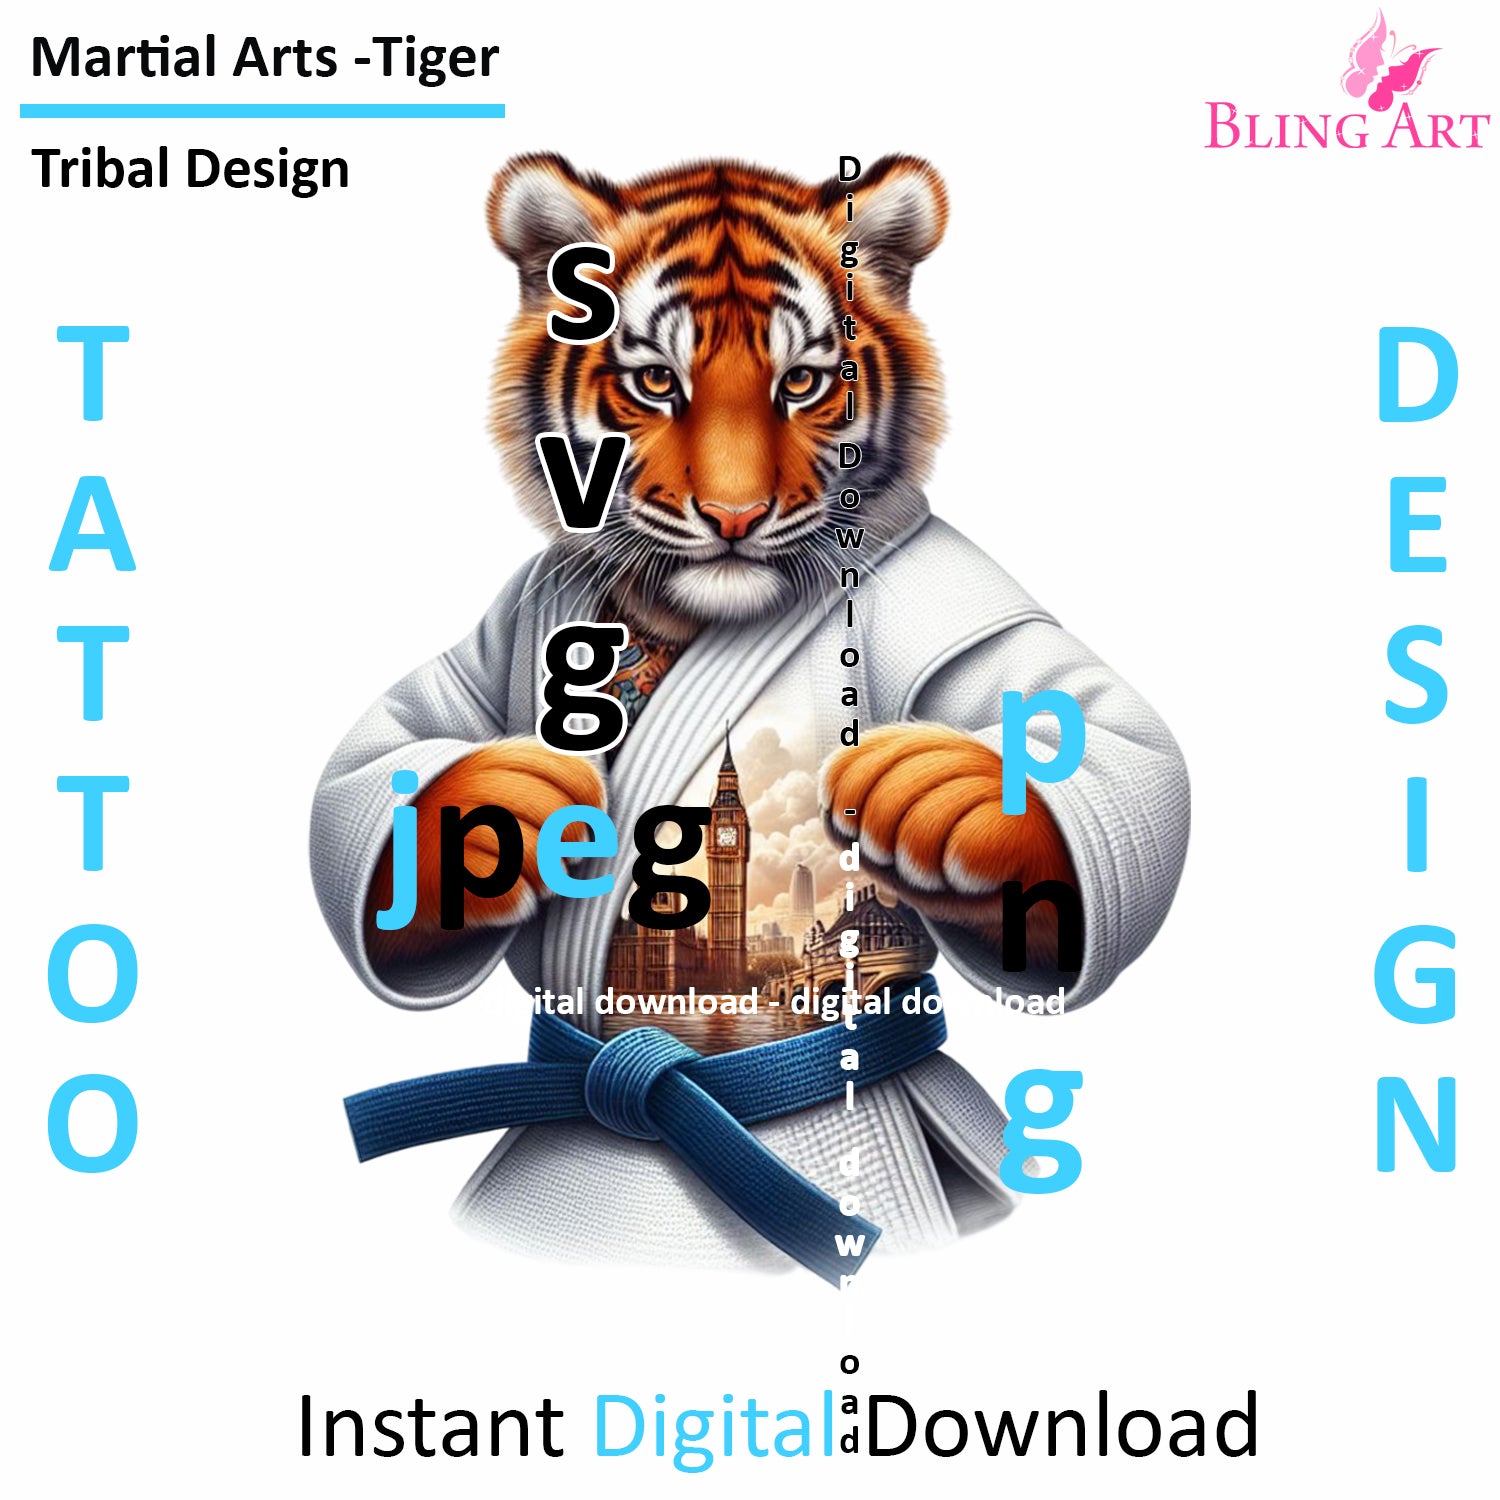 Tiger Martial Arts Tribal Tattoo Art - Digital Design (PNG, JPEG, SVG) - Instant Download for Tattoos, T-Shirts, Wall Art